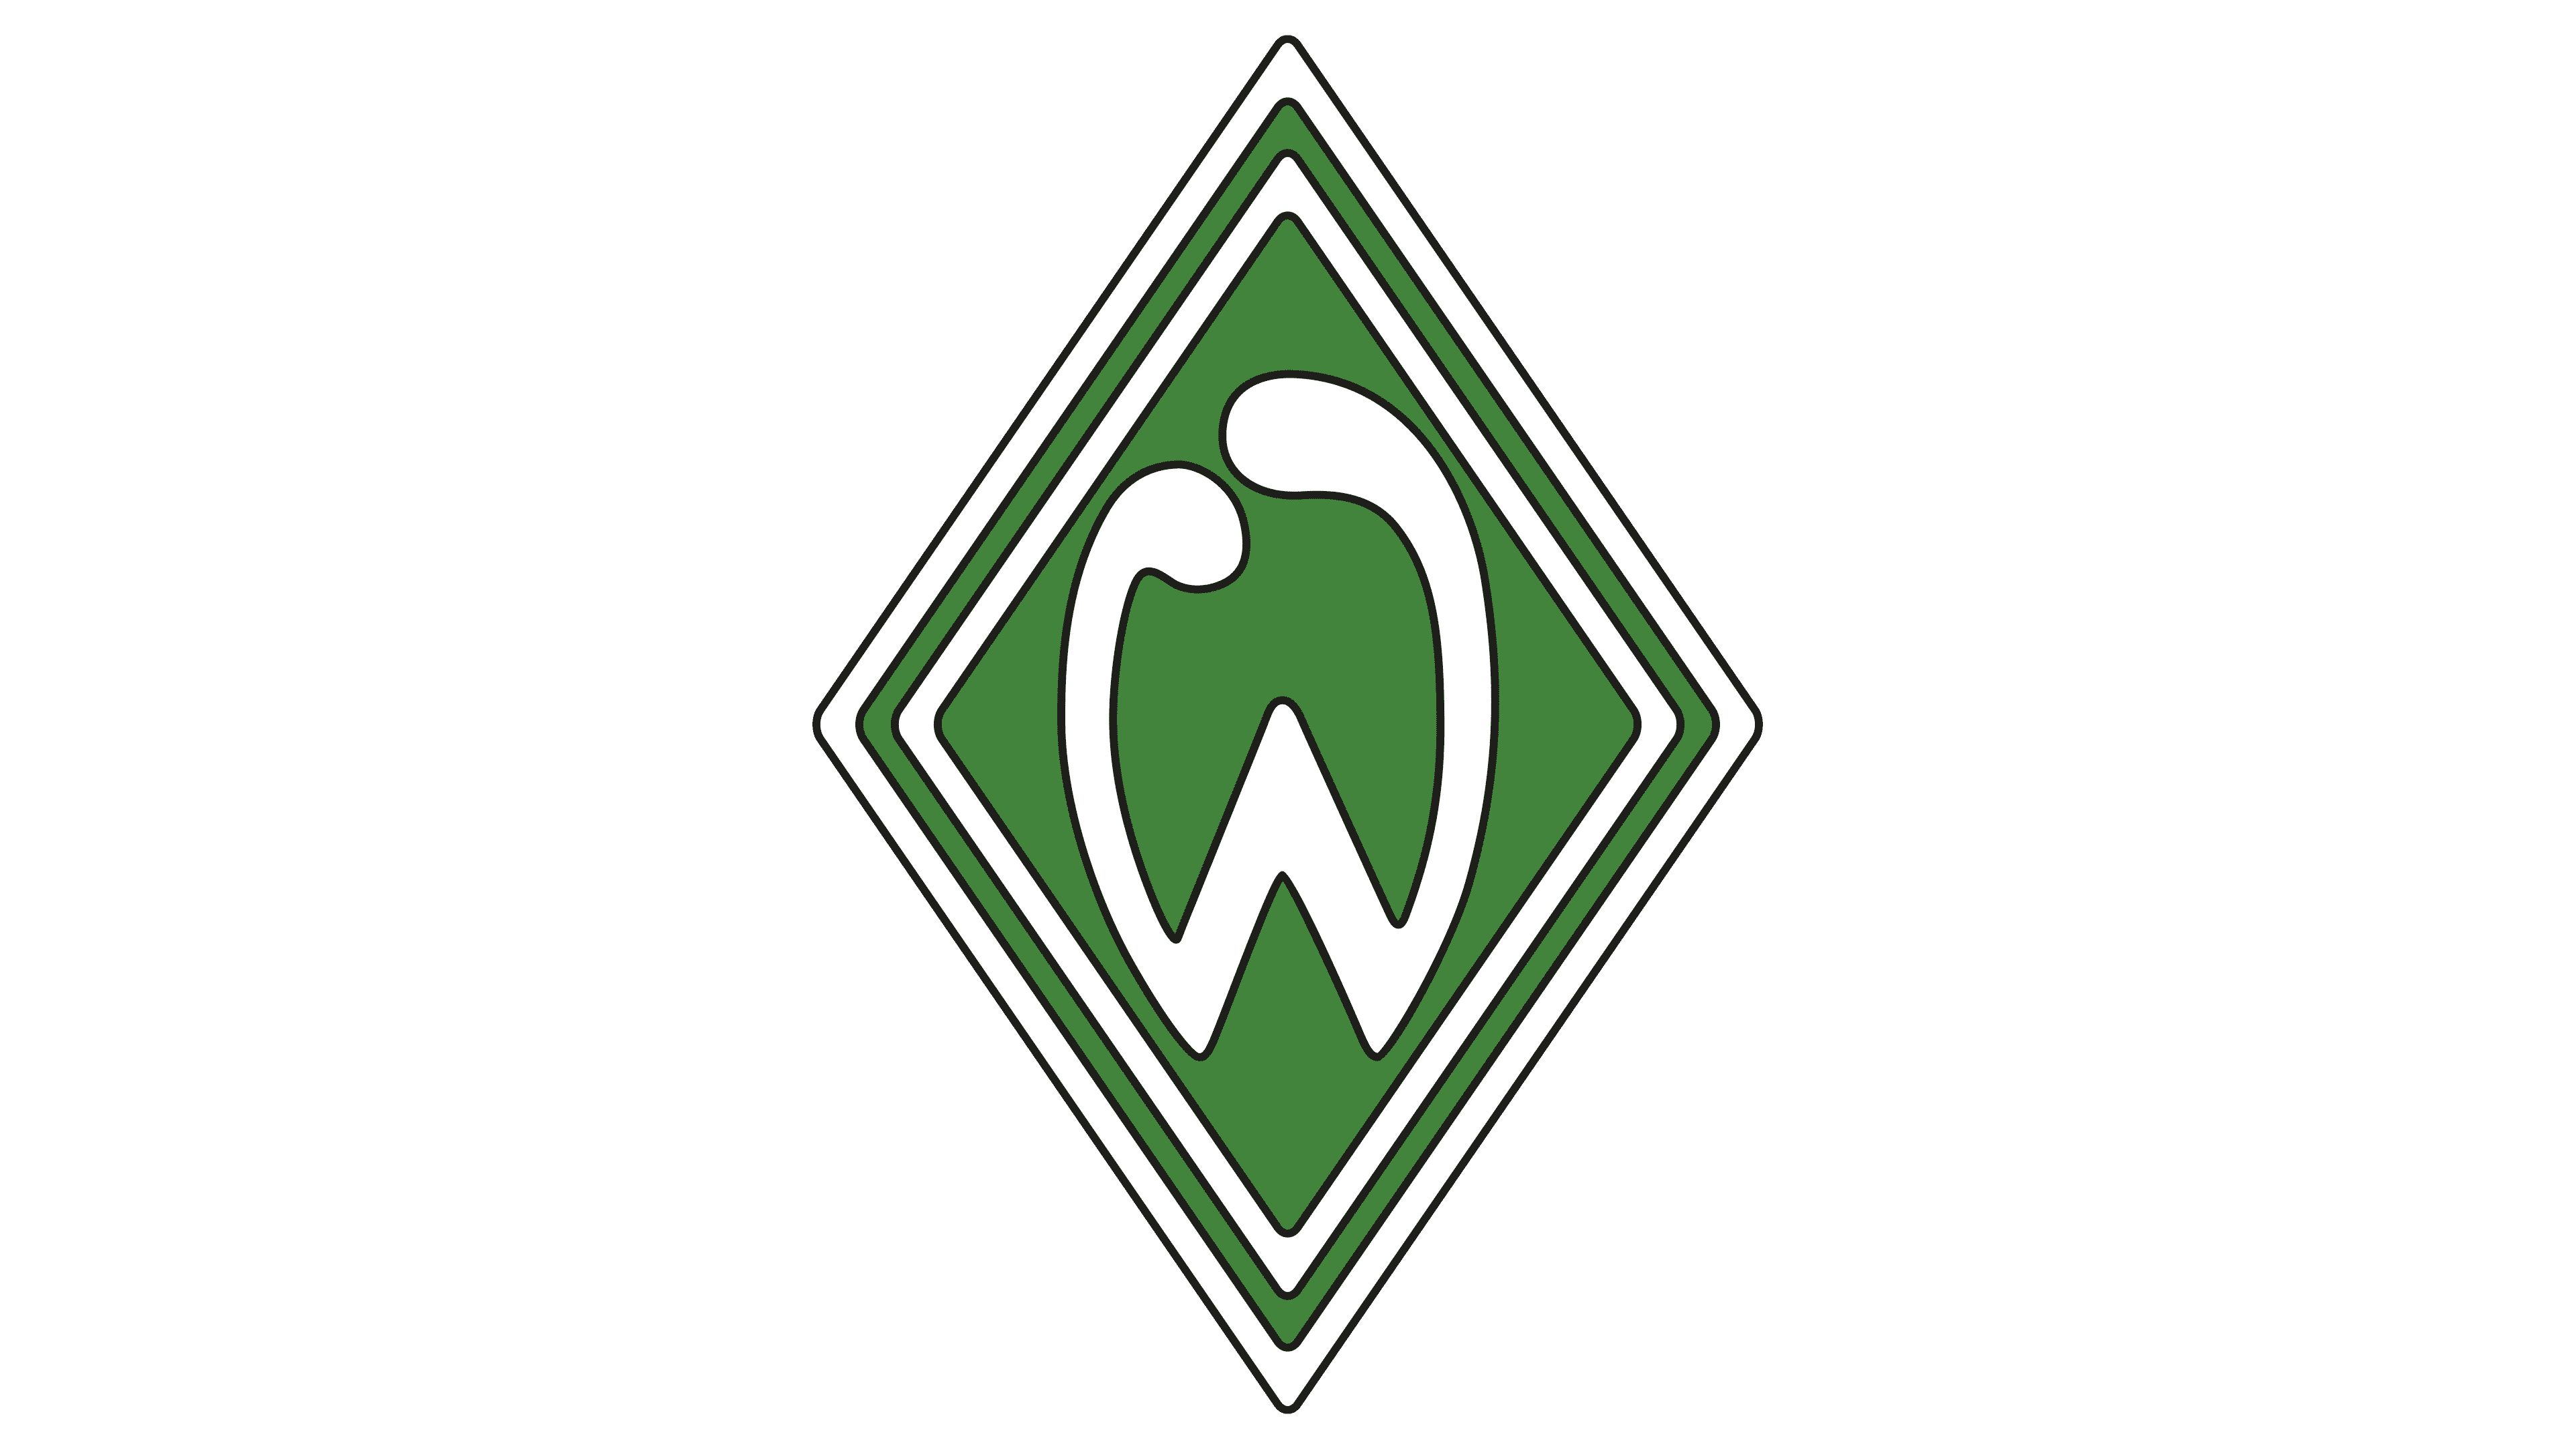 Werder Bremen Logo, PNG, Symbol, History, Meaning